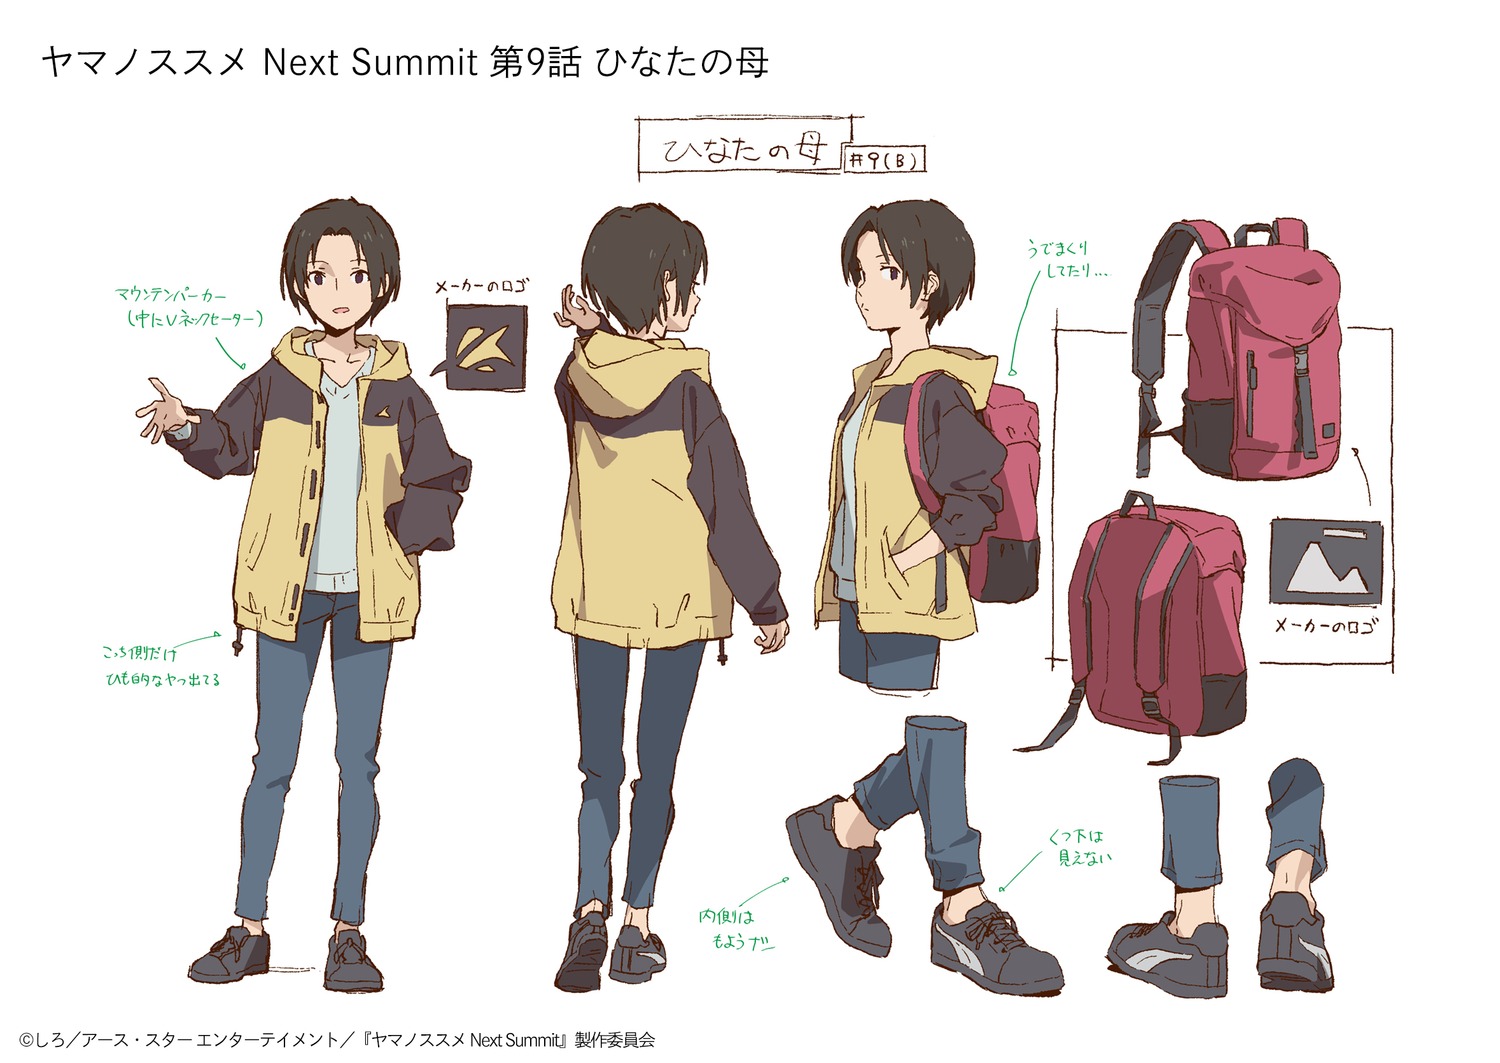 character_design production_materials settei yama_no_susume:_next_summit yama_no_susume_series yusei_koumoto